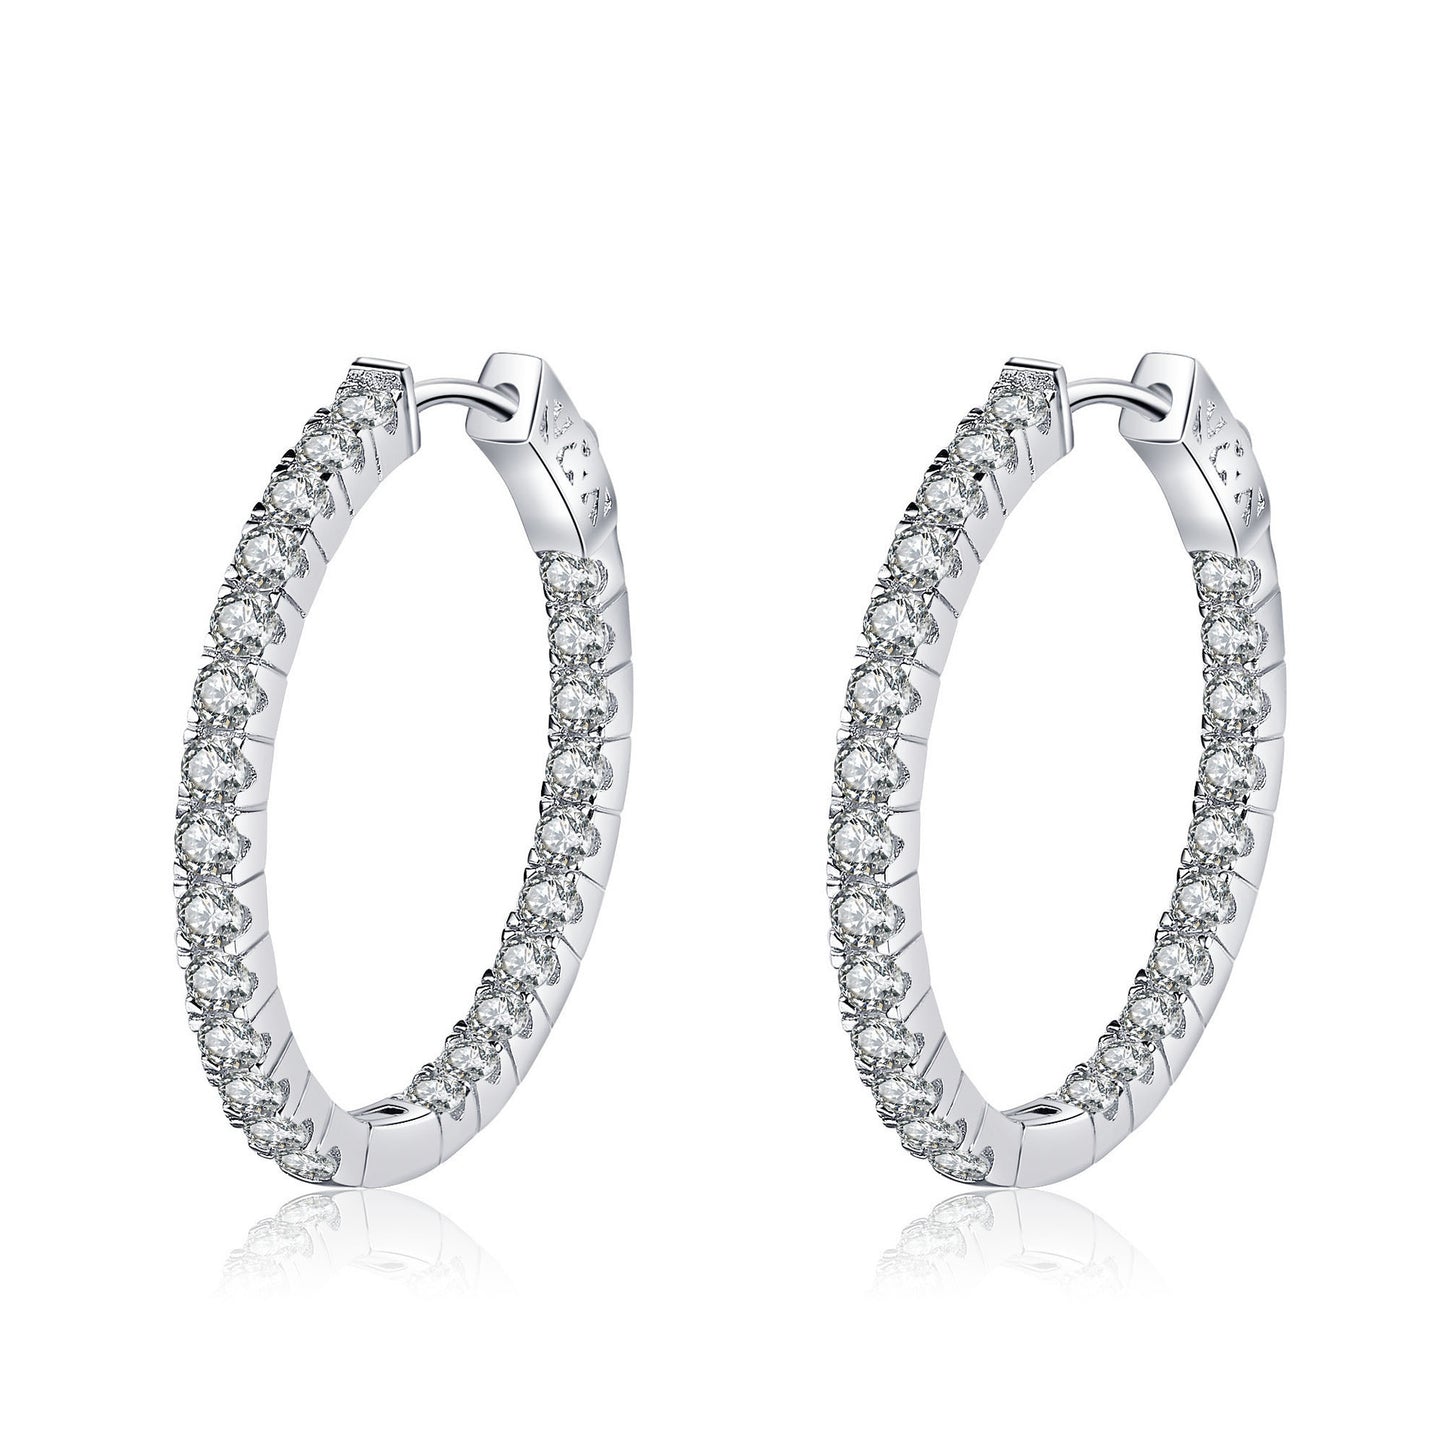 Premium Sterling Silver Earrings For Women